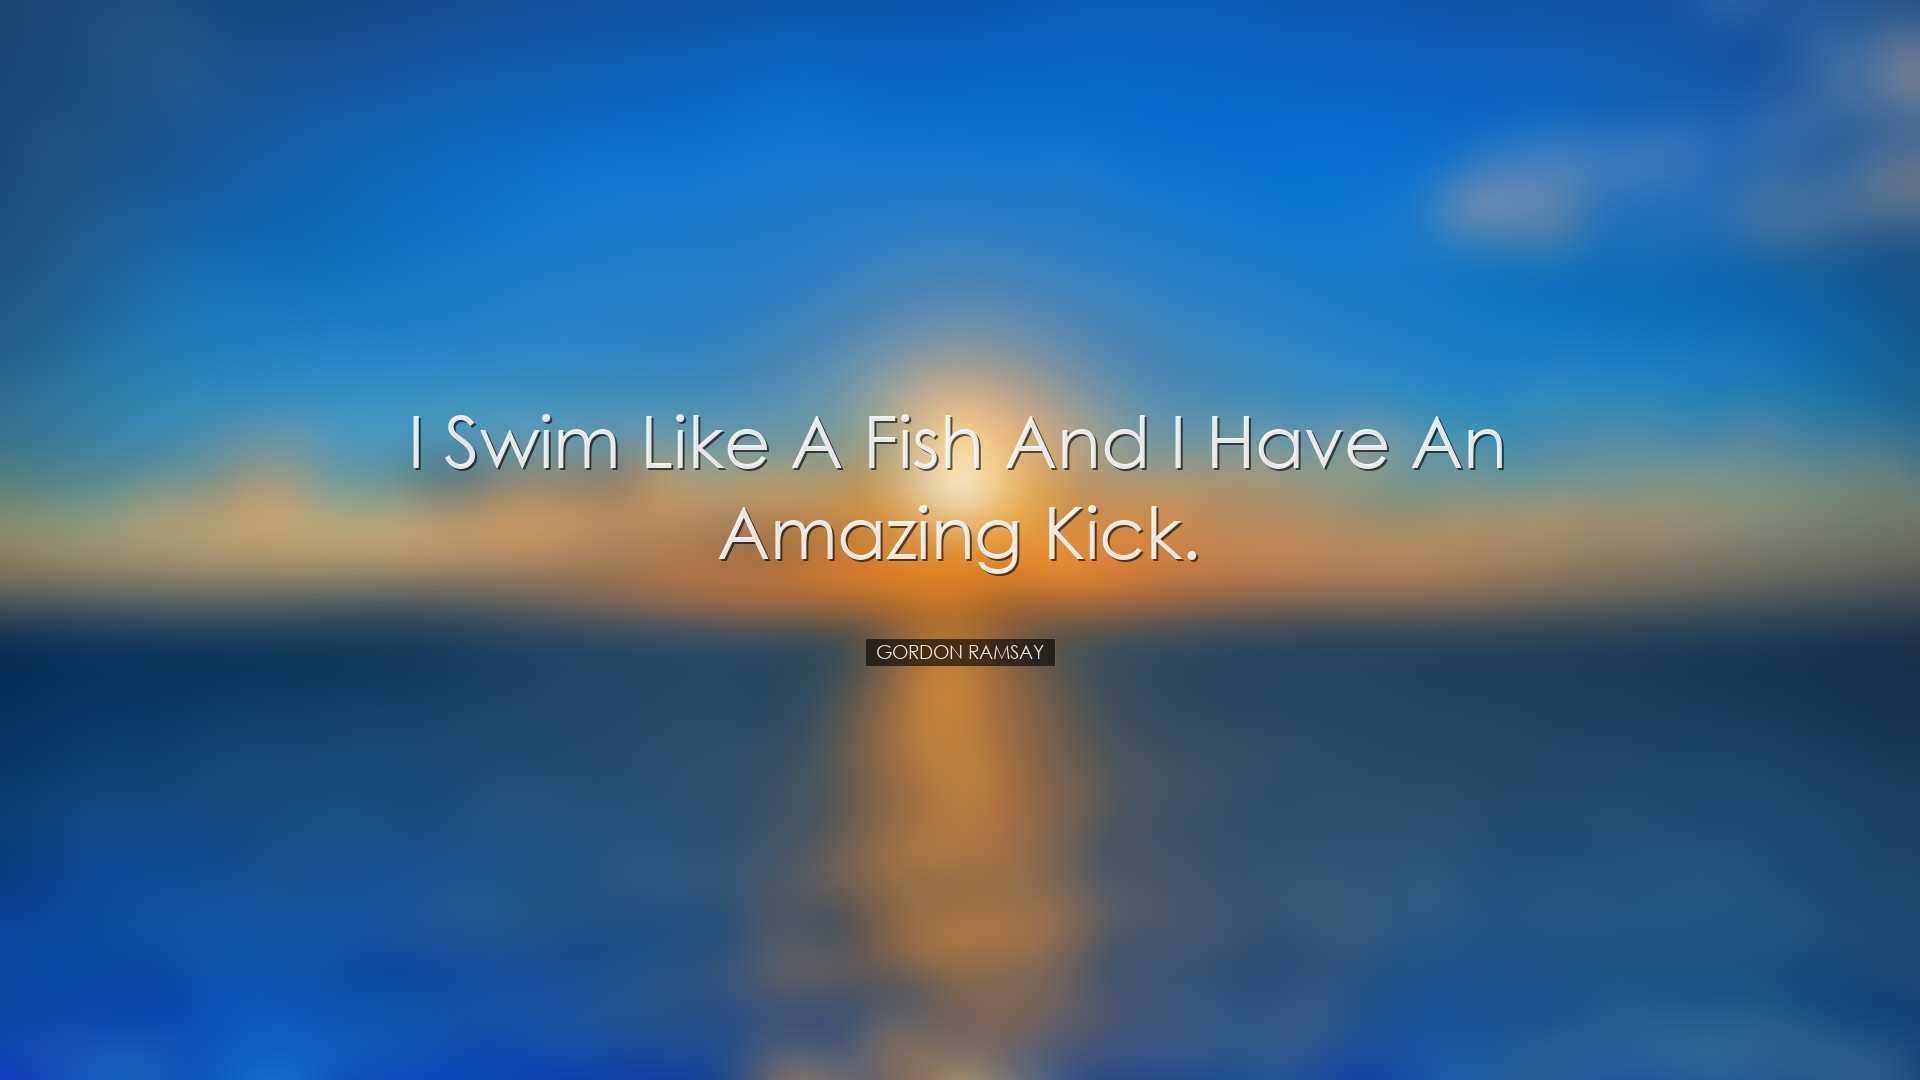 I swim like a fish and I have an amazing kick. - Gordon Ramsay